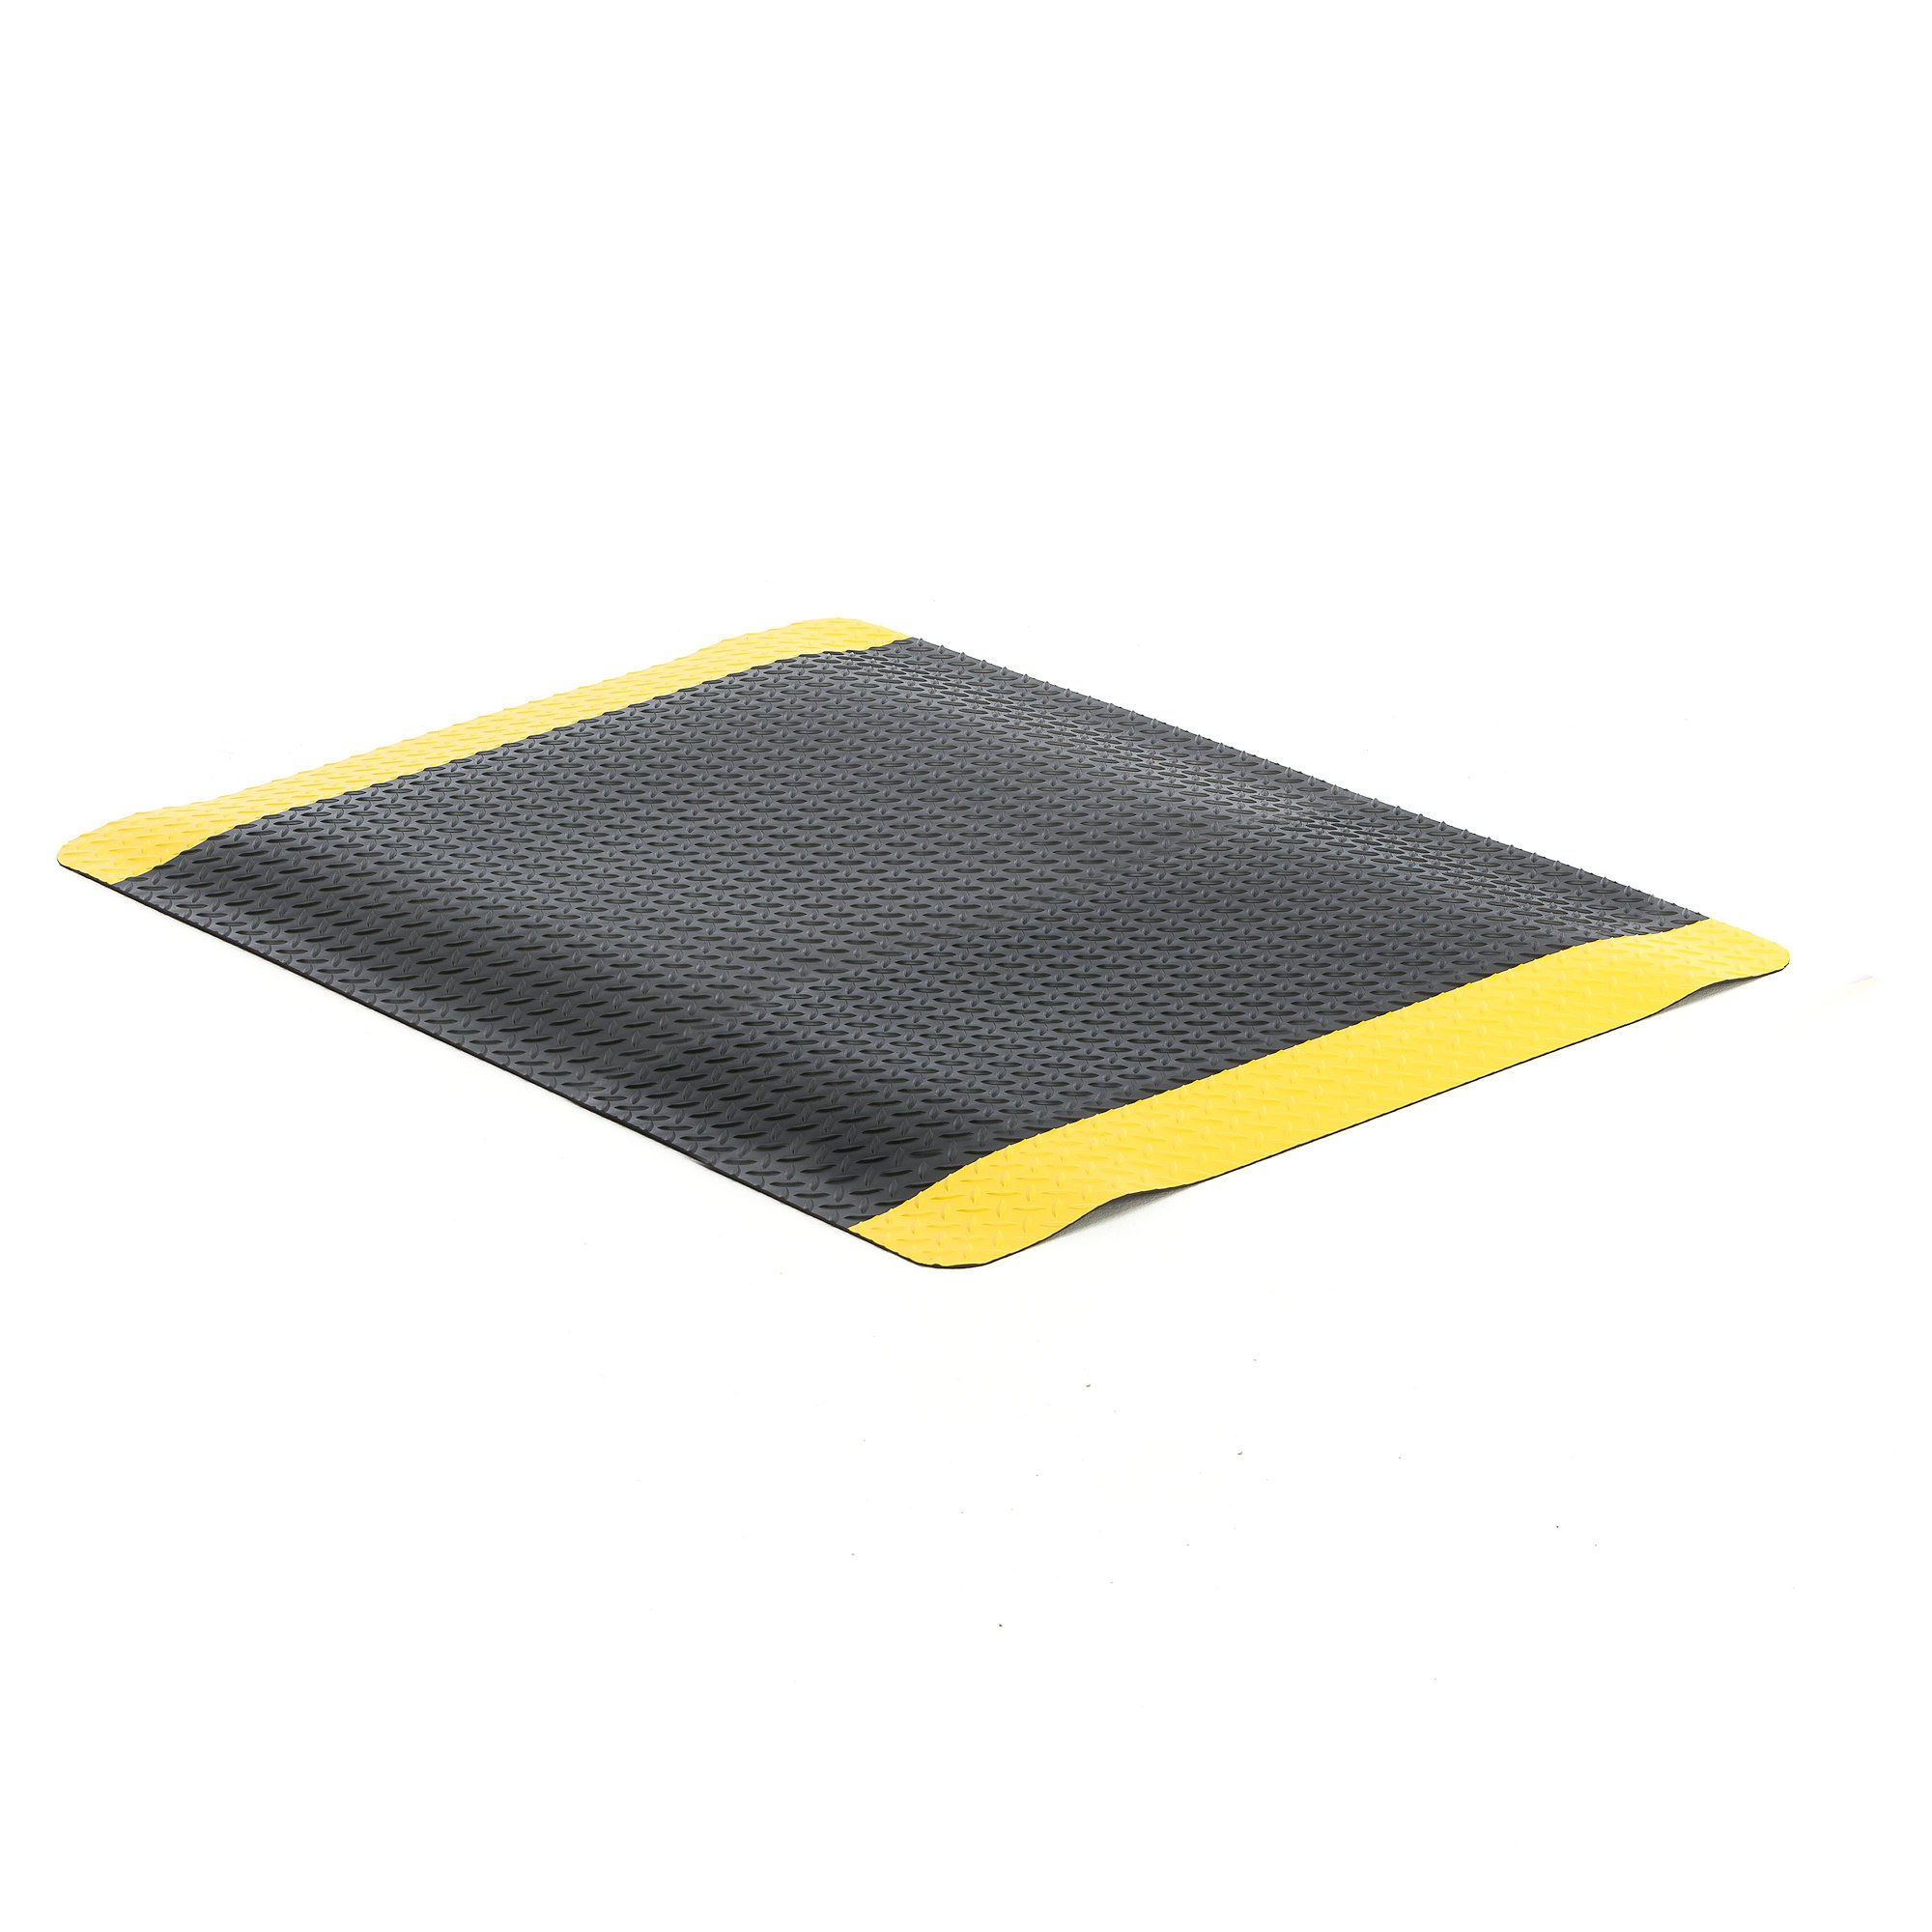 Heavy-duty anti-fatigue mat SUPER PLUS, per metre, W 1220 mm, black, yellow